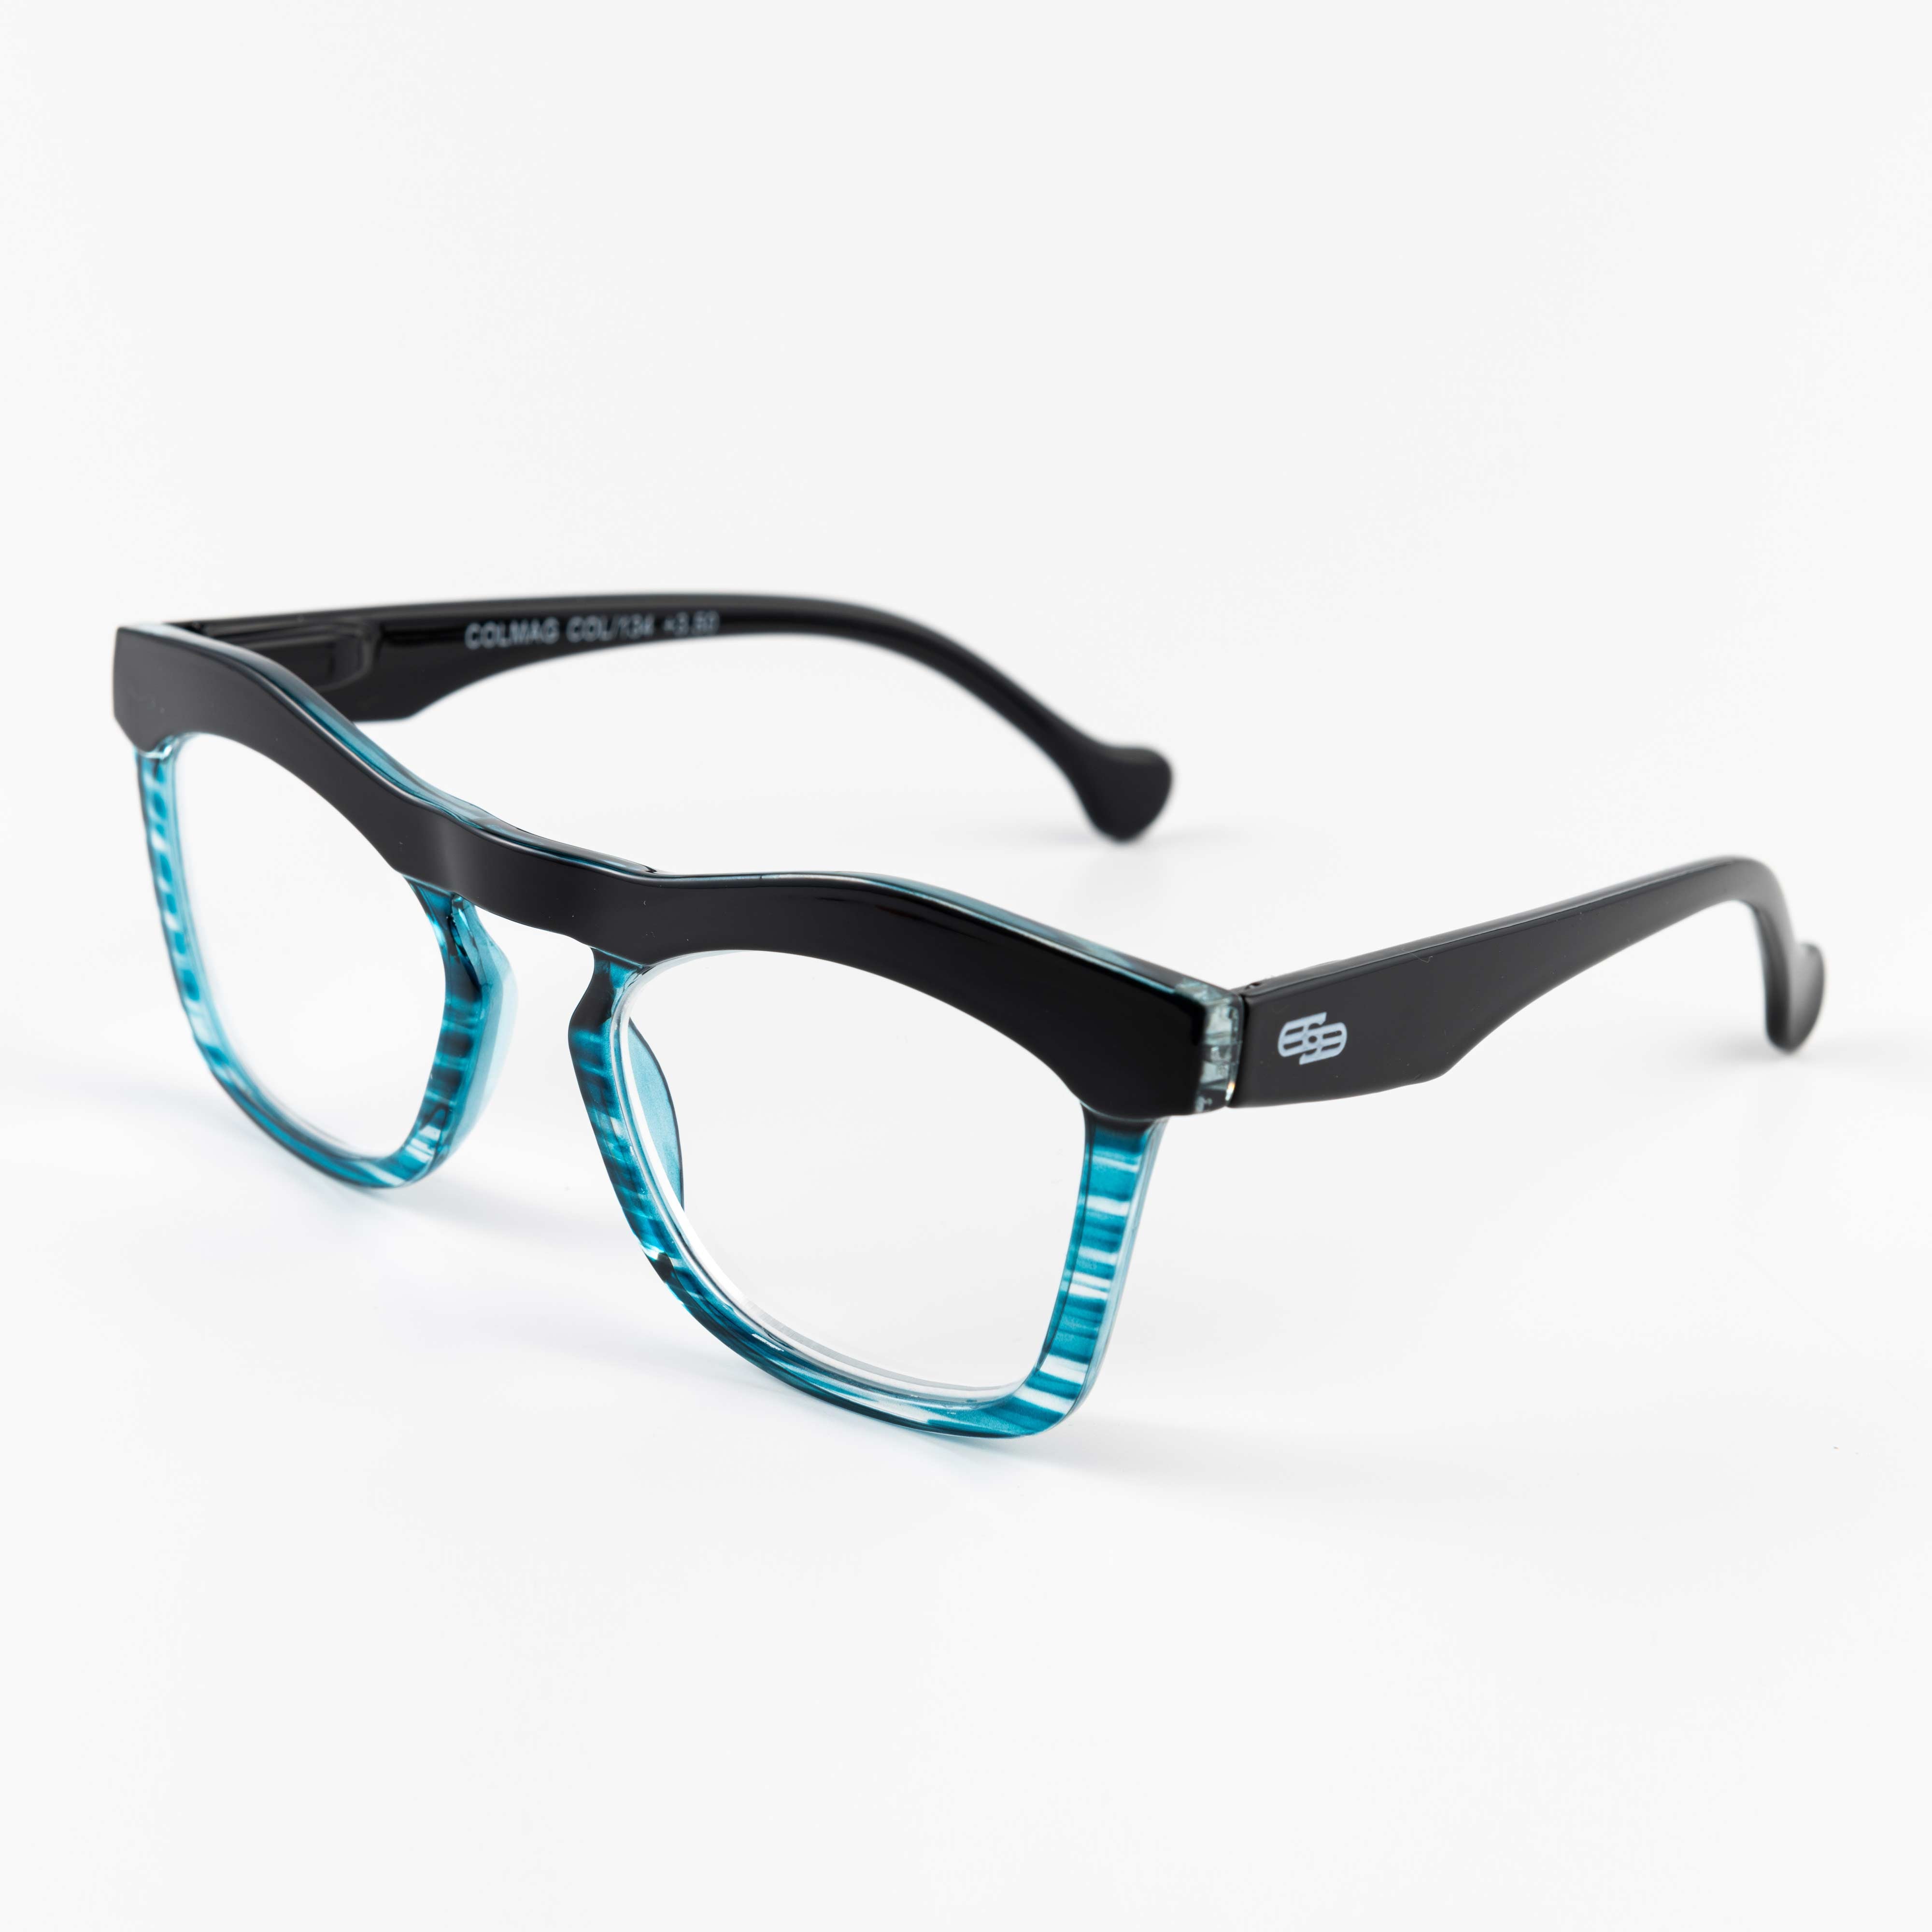 Blue tortoiseshell square reading glasses